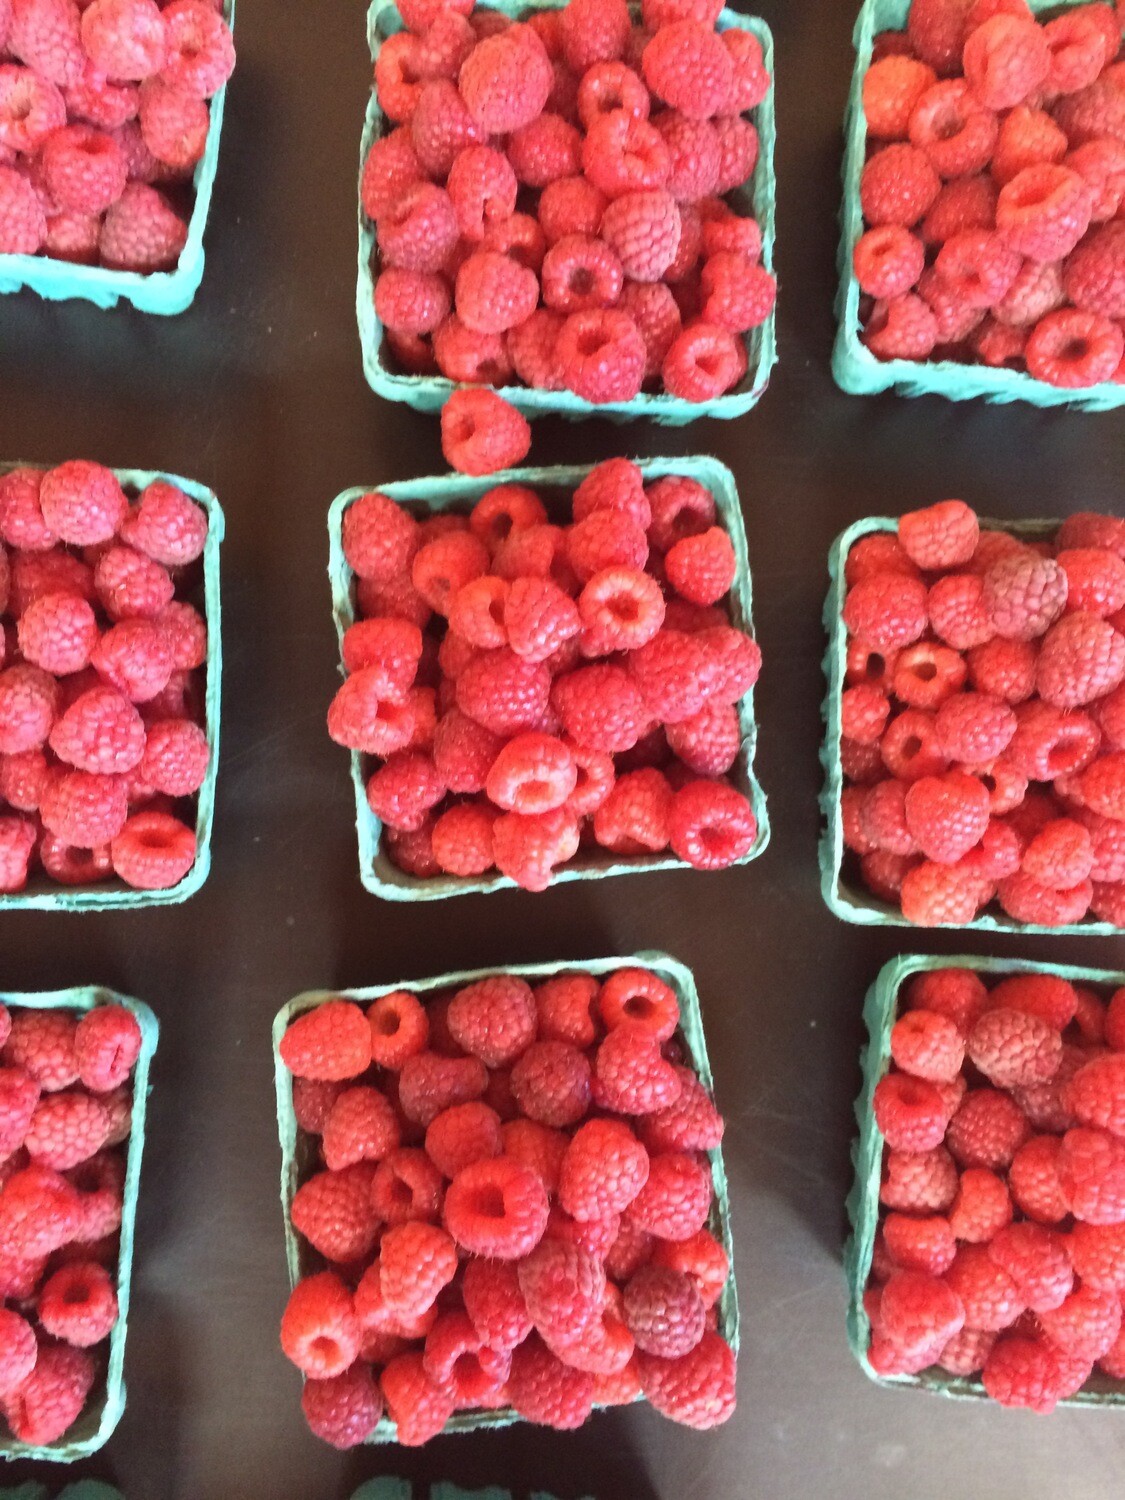 Raspberries - 1/2 Pint